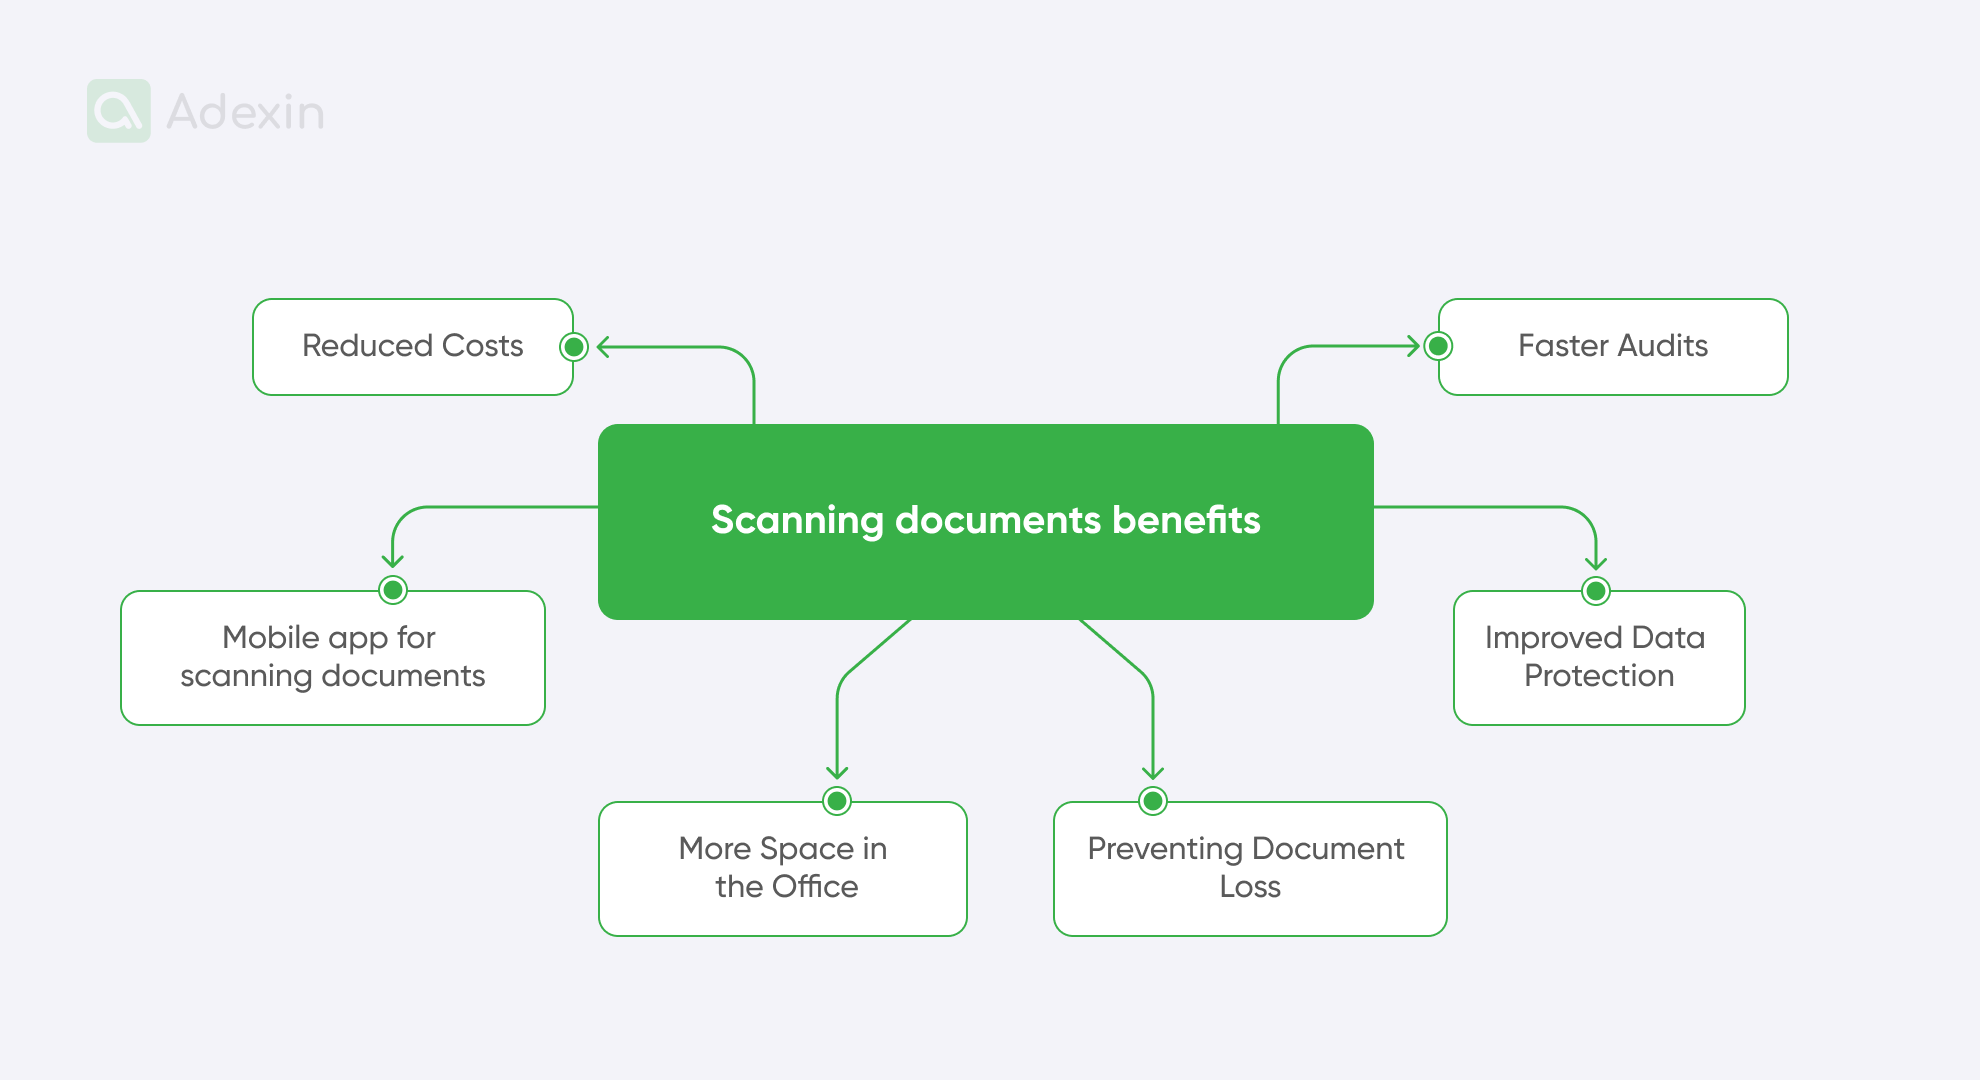 Scanning documents benefits